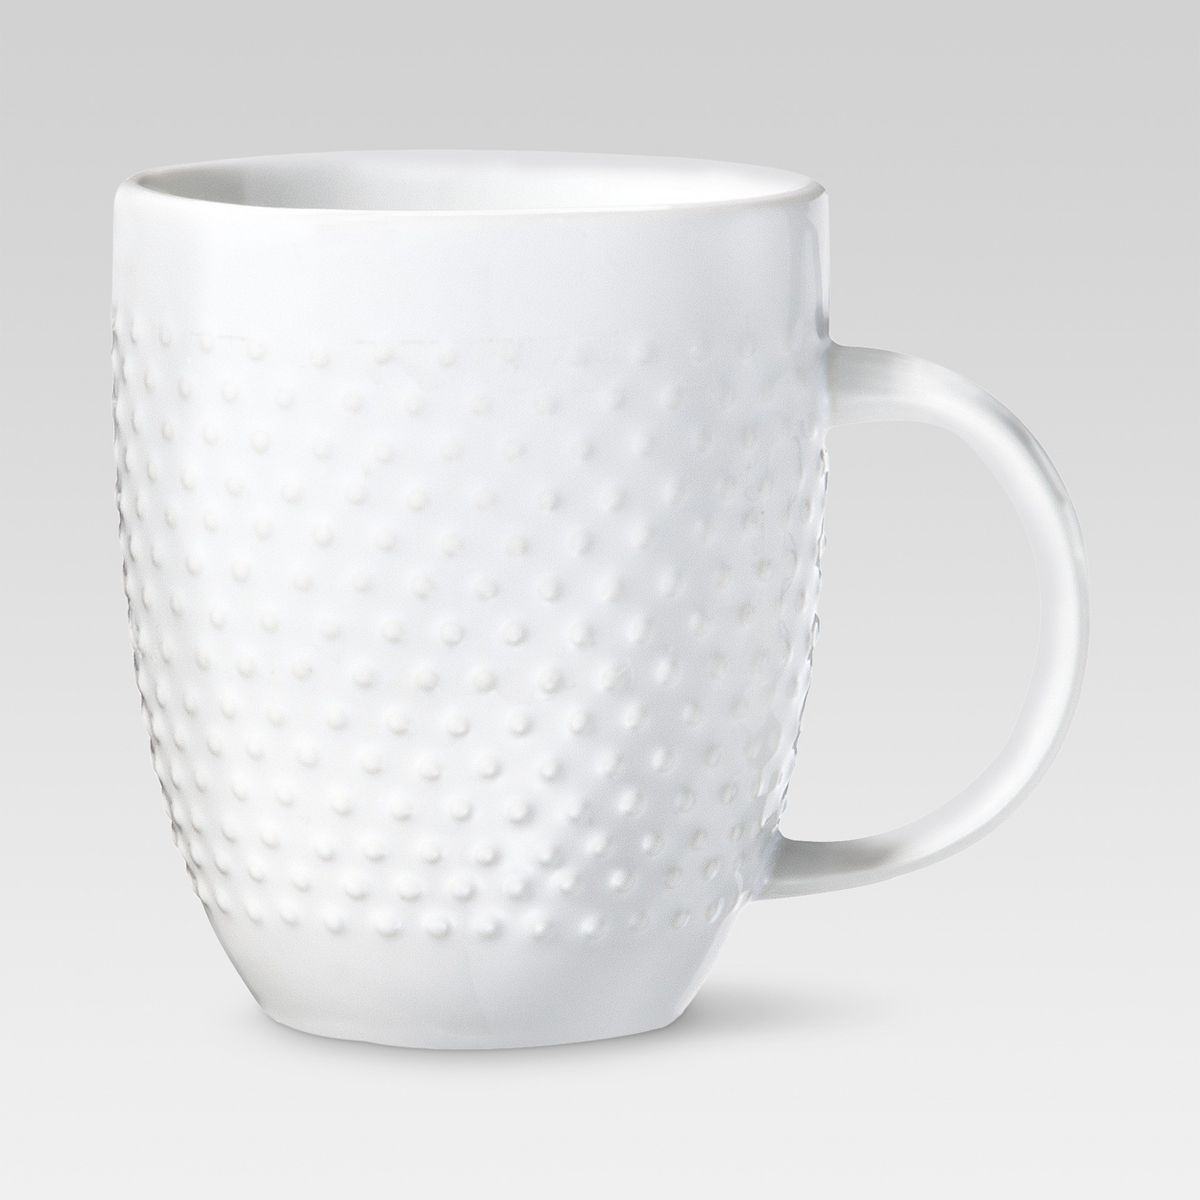 Beaded Porcelain Coffee Mug 15oz - White - Threshold™ | Target